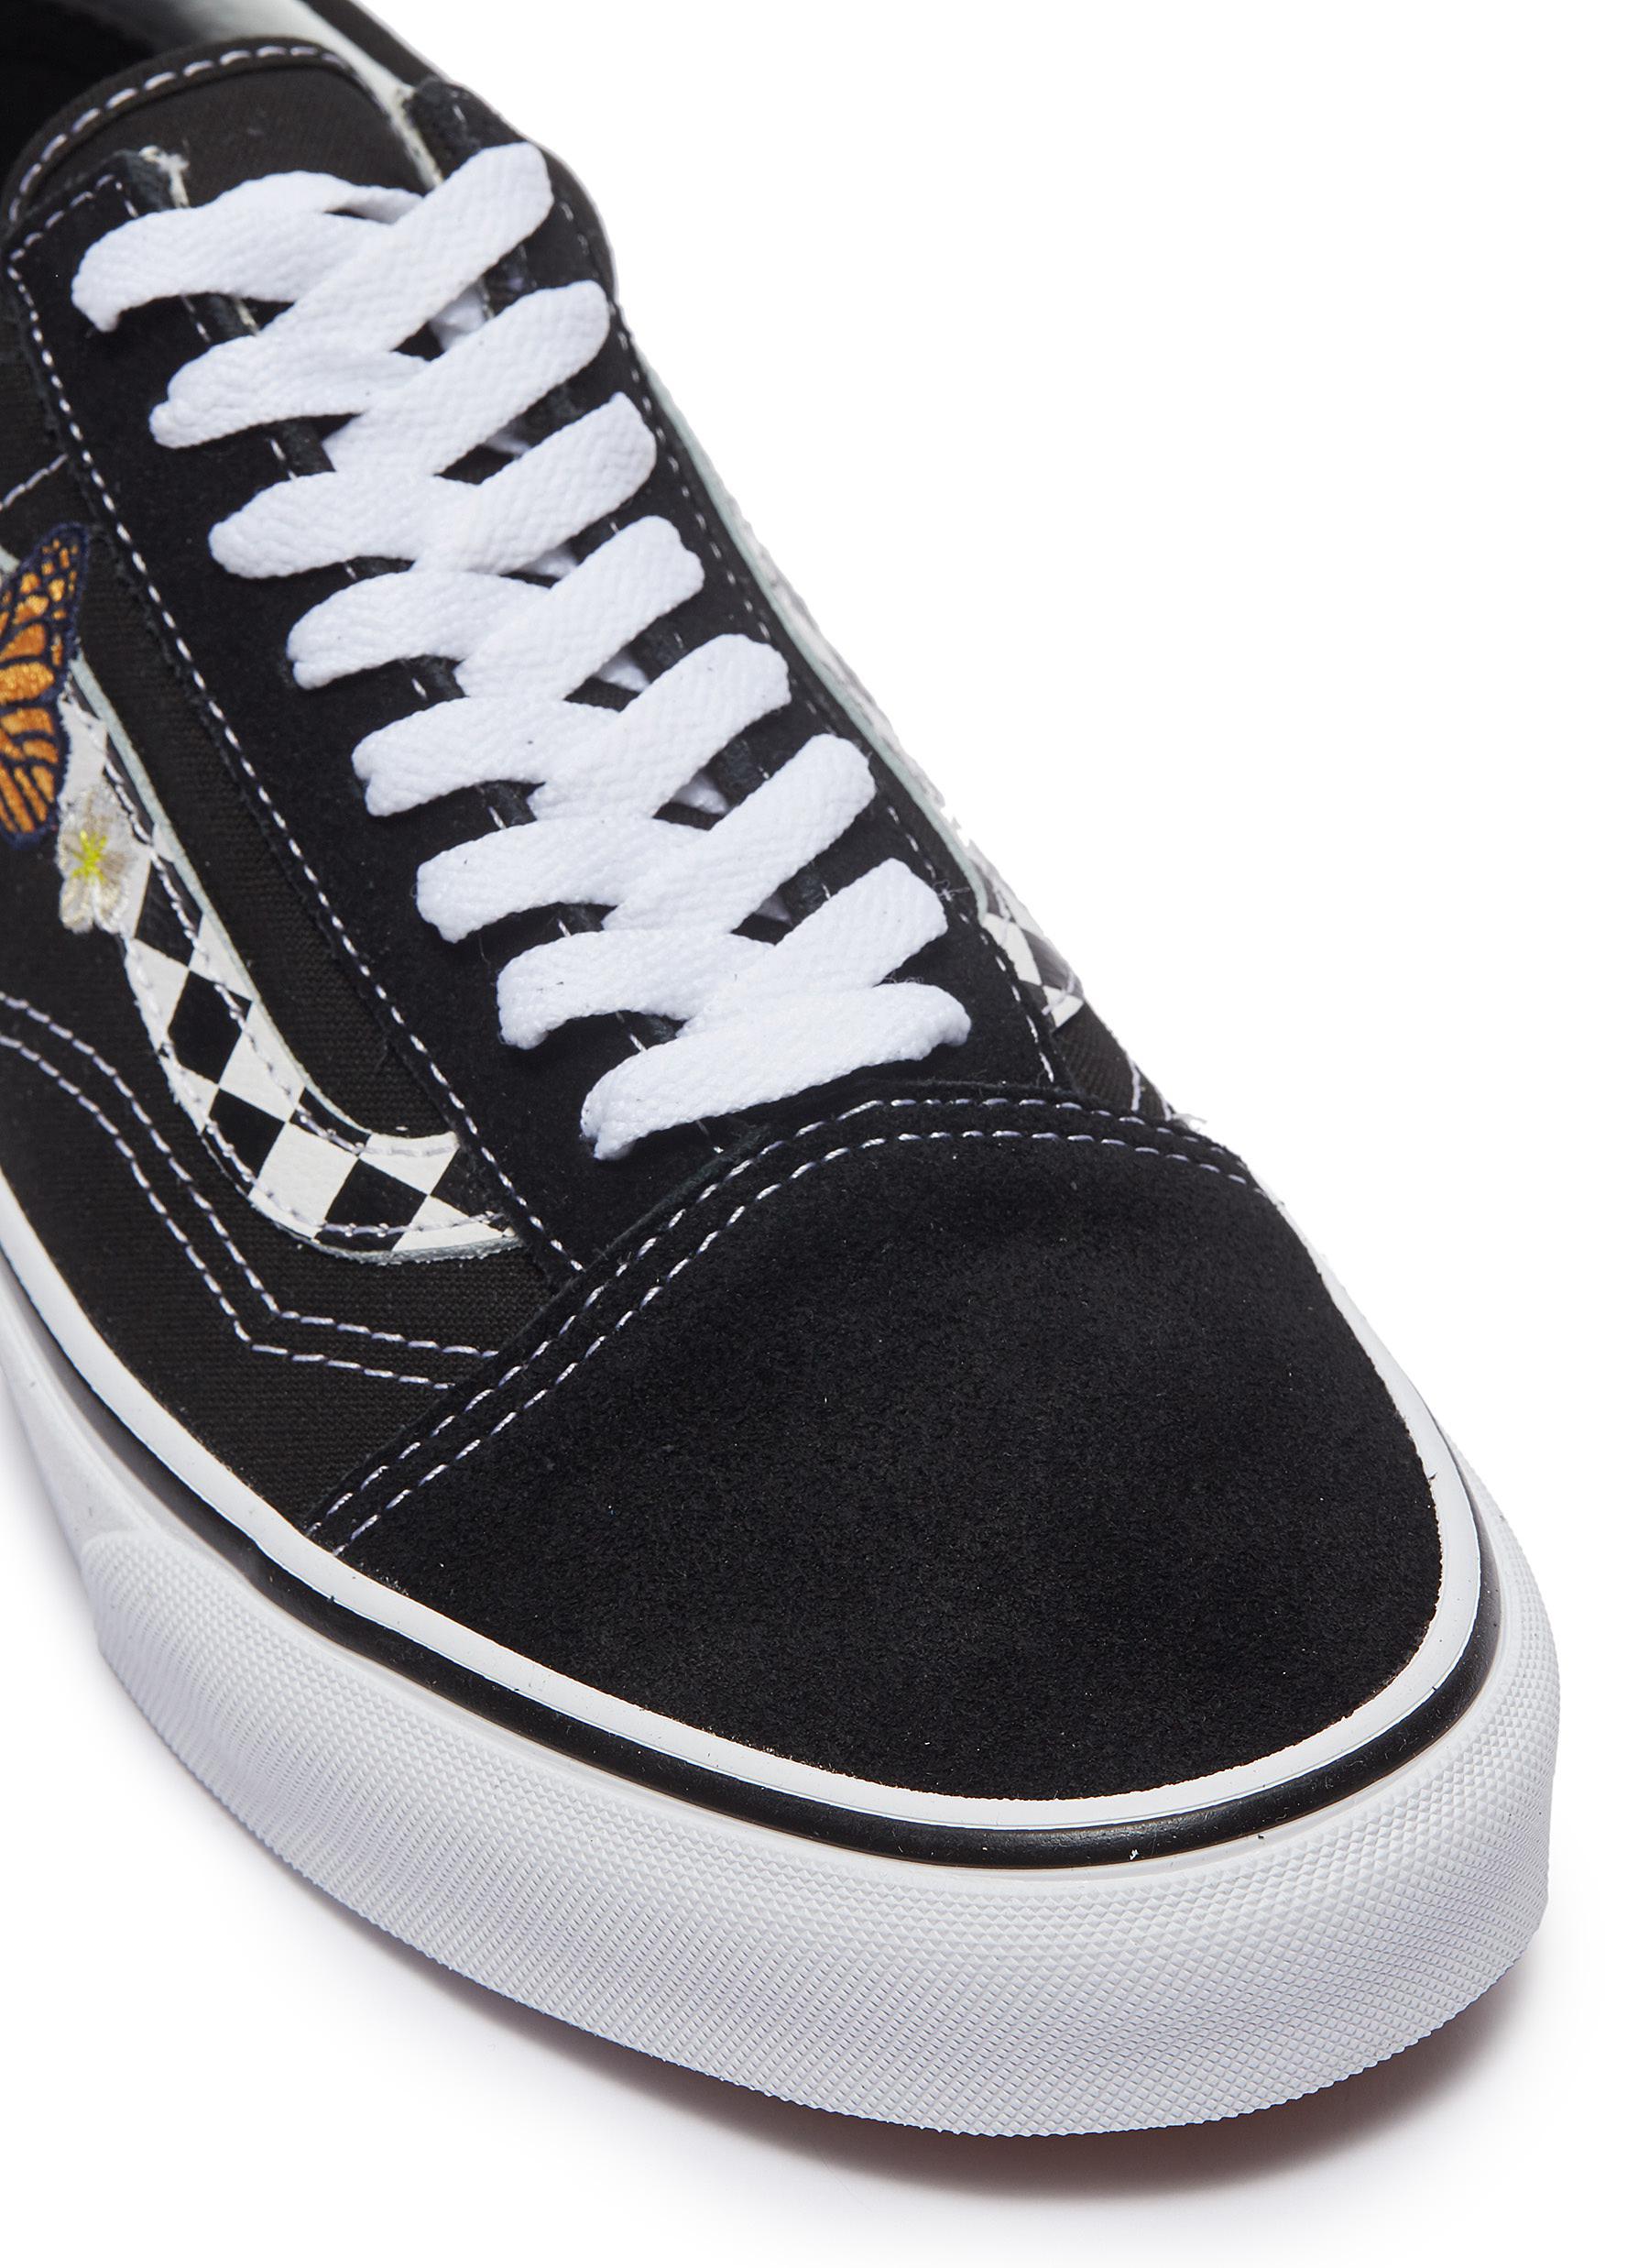 vans old skool black & white checkered floral skate shoes